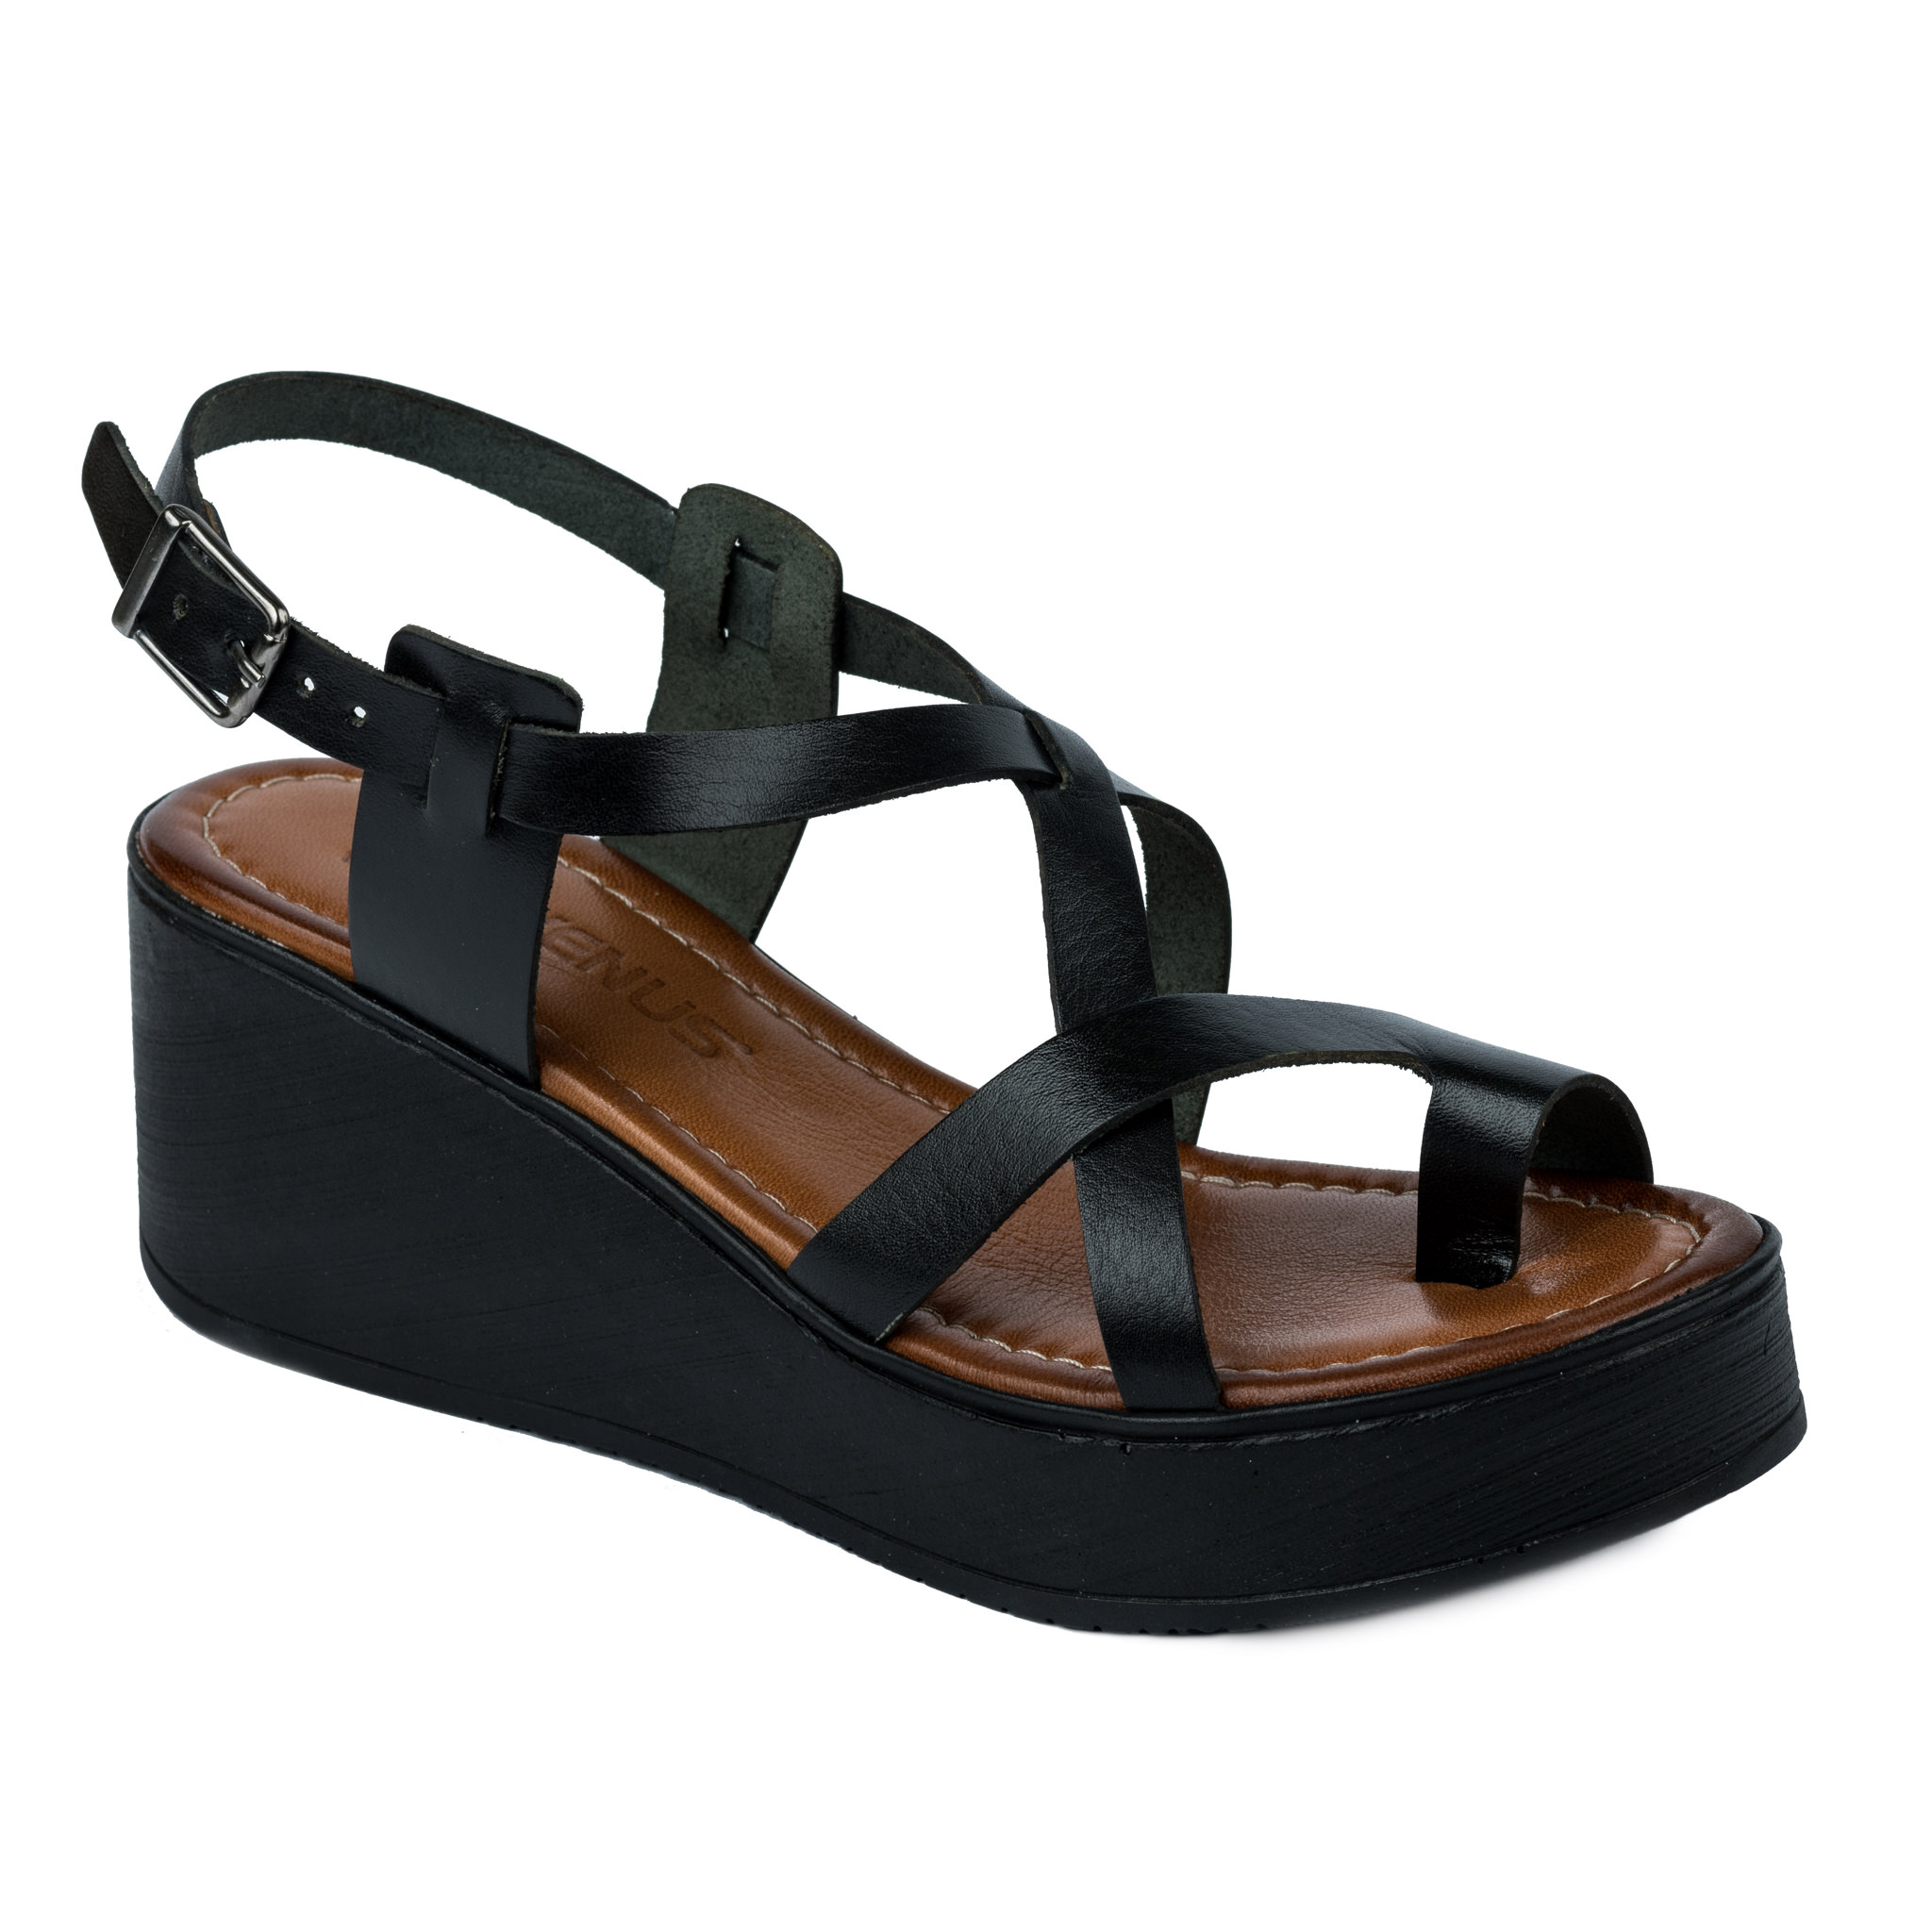 Women sandals A230 - BLACK